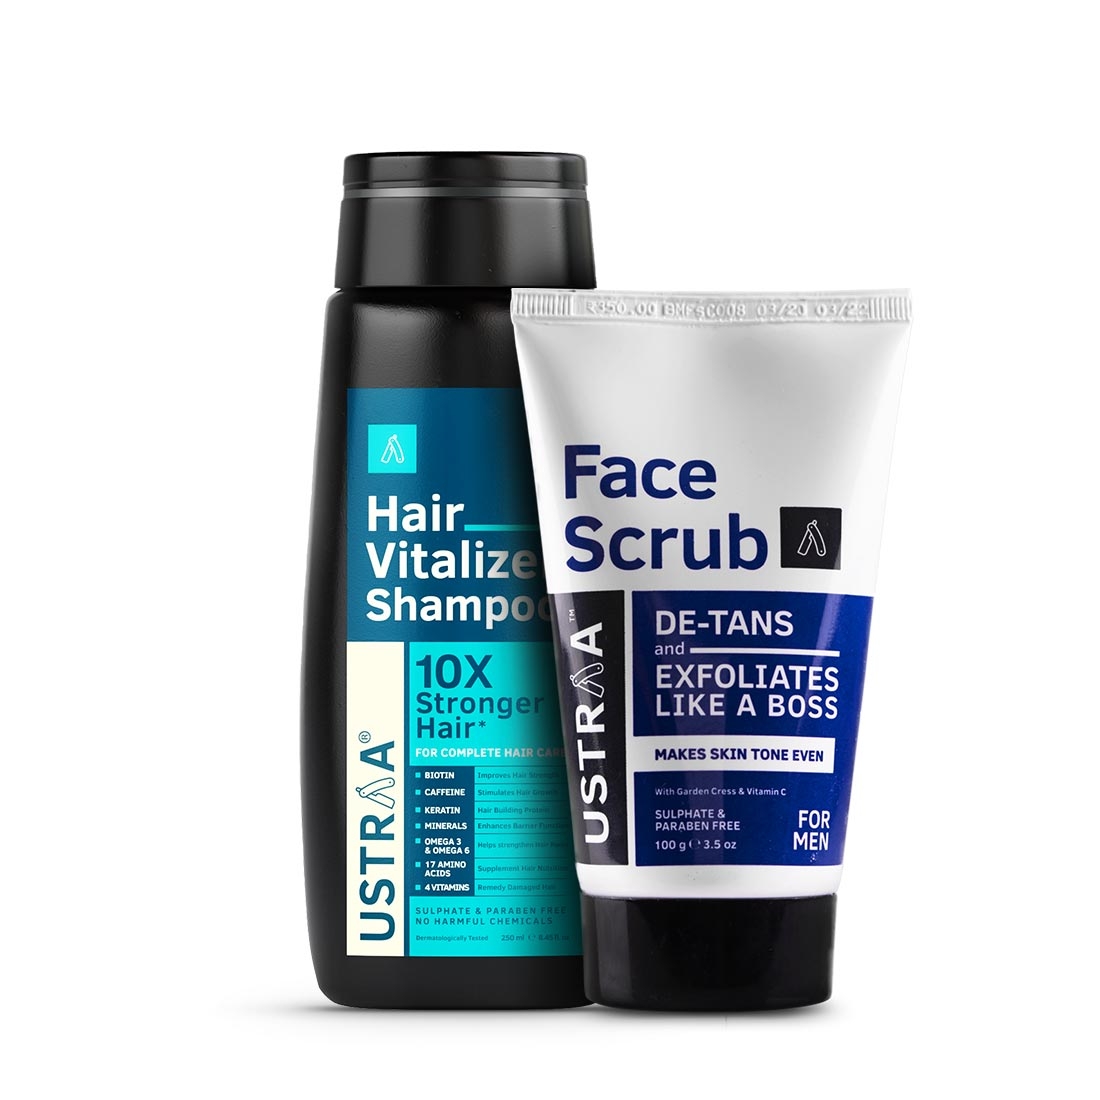 Ustraa | Ustraa Hair Vitalizer Shampoo - 250ml & Face Scrub De Tan - 100g 0